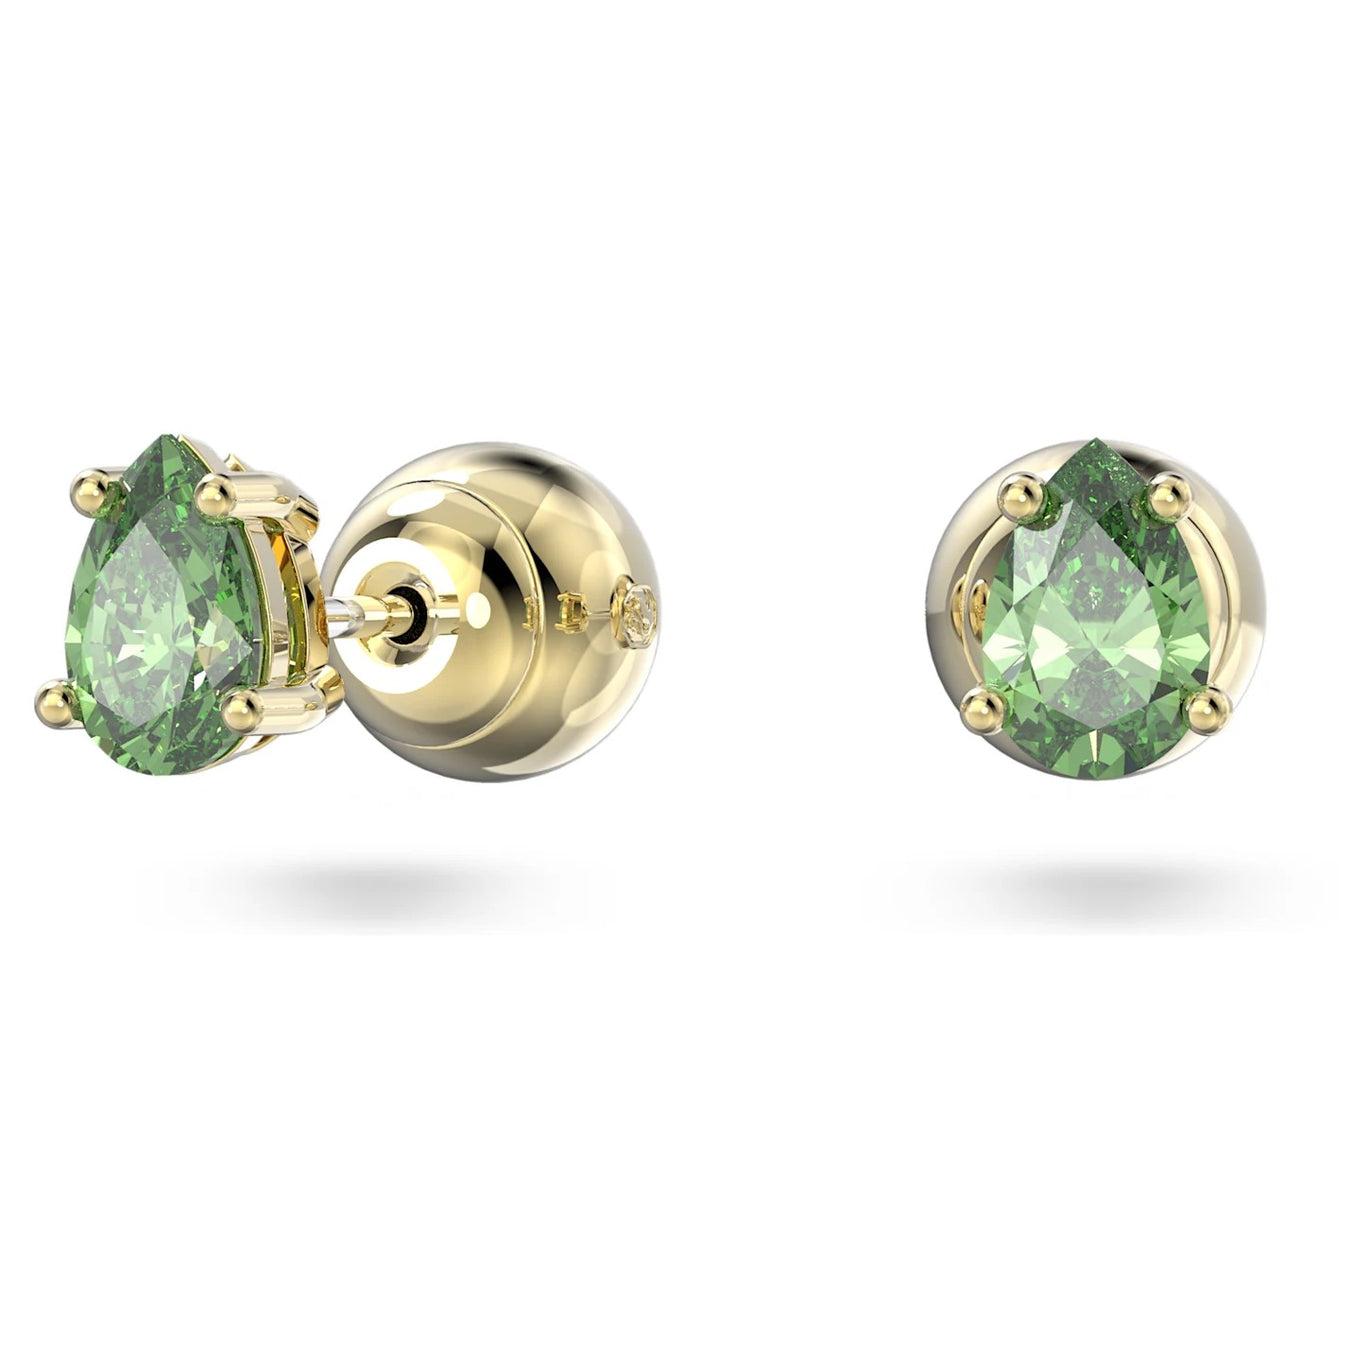 Swarovski Stilla Pear cut stud earrings, Green, Gold-tone plated